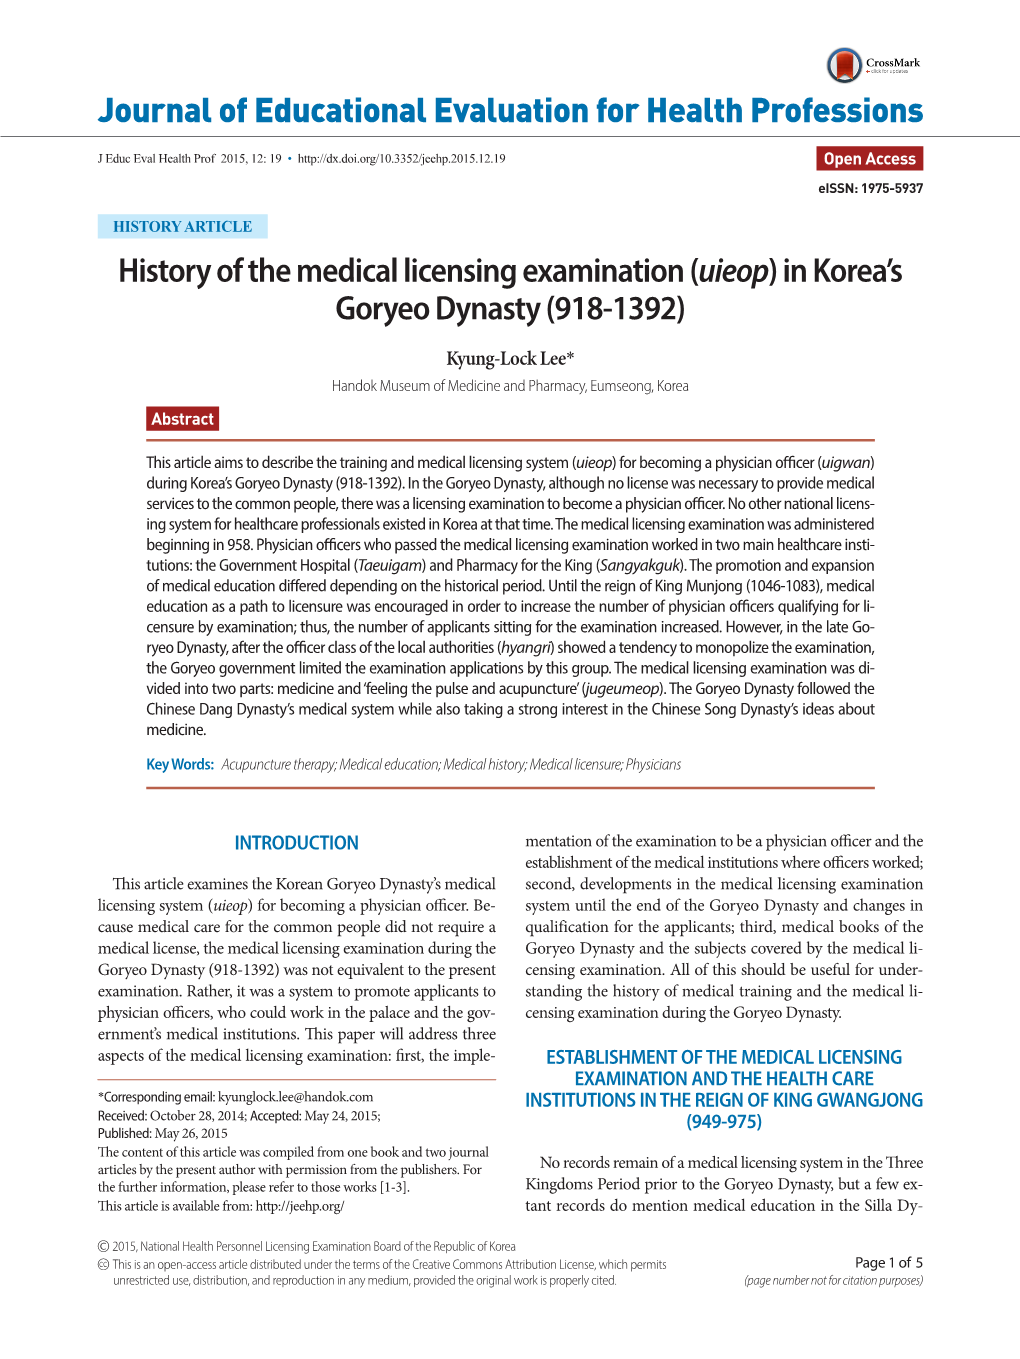 History of the Medical Licensing Examination (Uieop) in Korea's